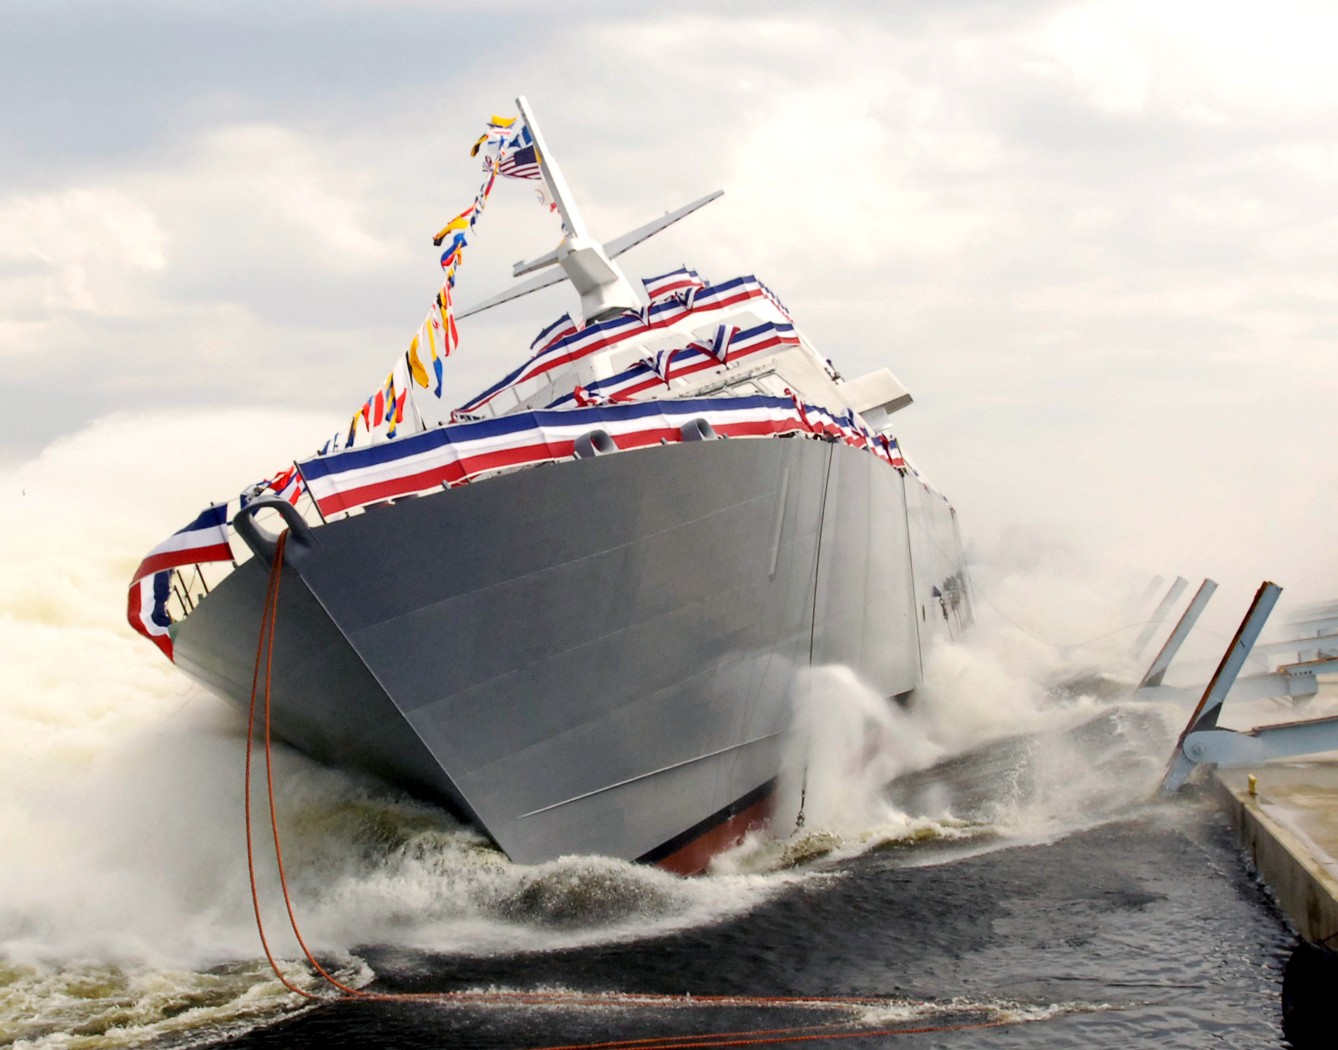 lcs-1 uss freedom class littoral combat ship us navy 149 launching fincantieri marinette marine